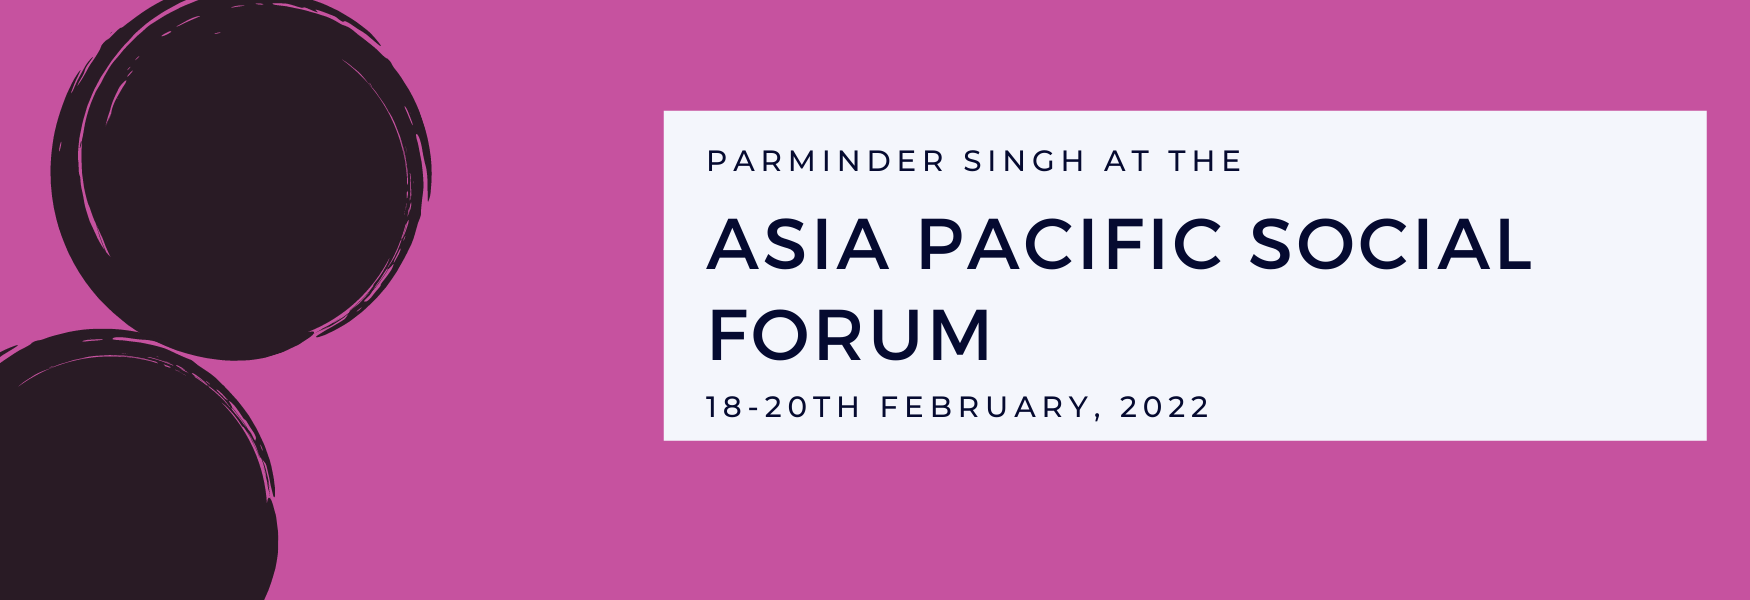 Asia Pacific Social Forum